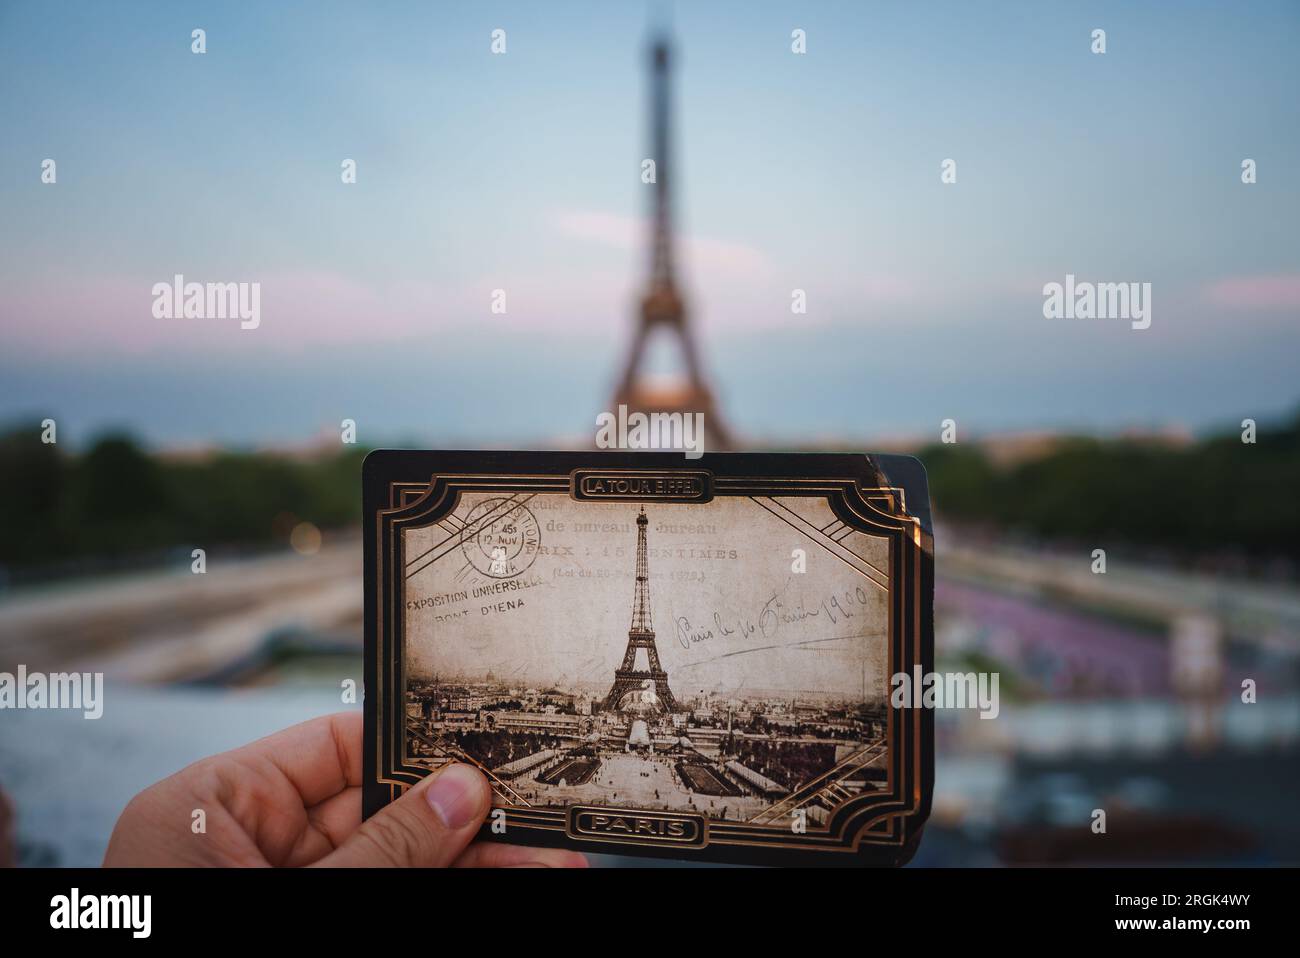 Holding Eiffel Tower Photo in Paris Stock Photo